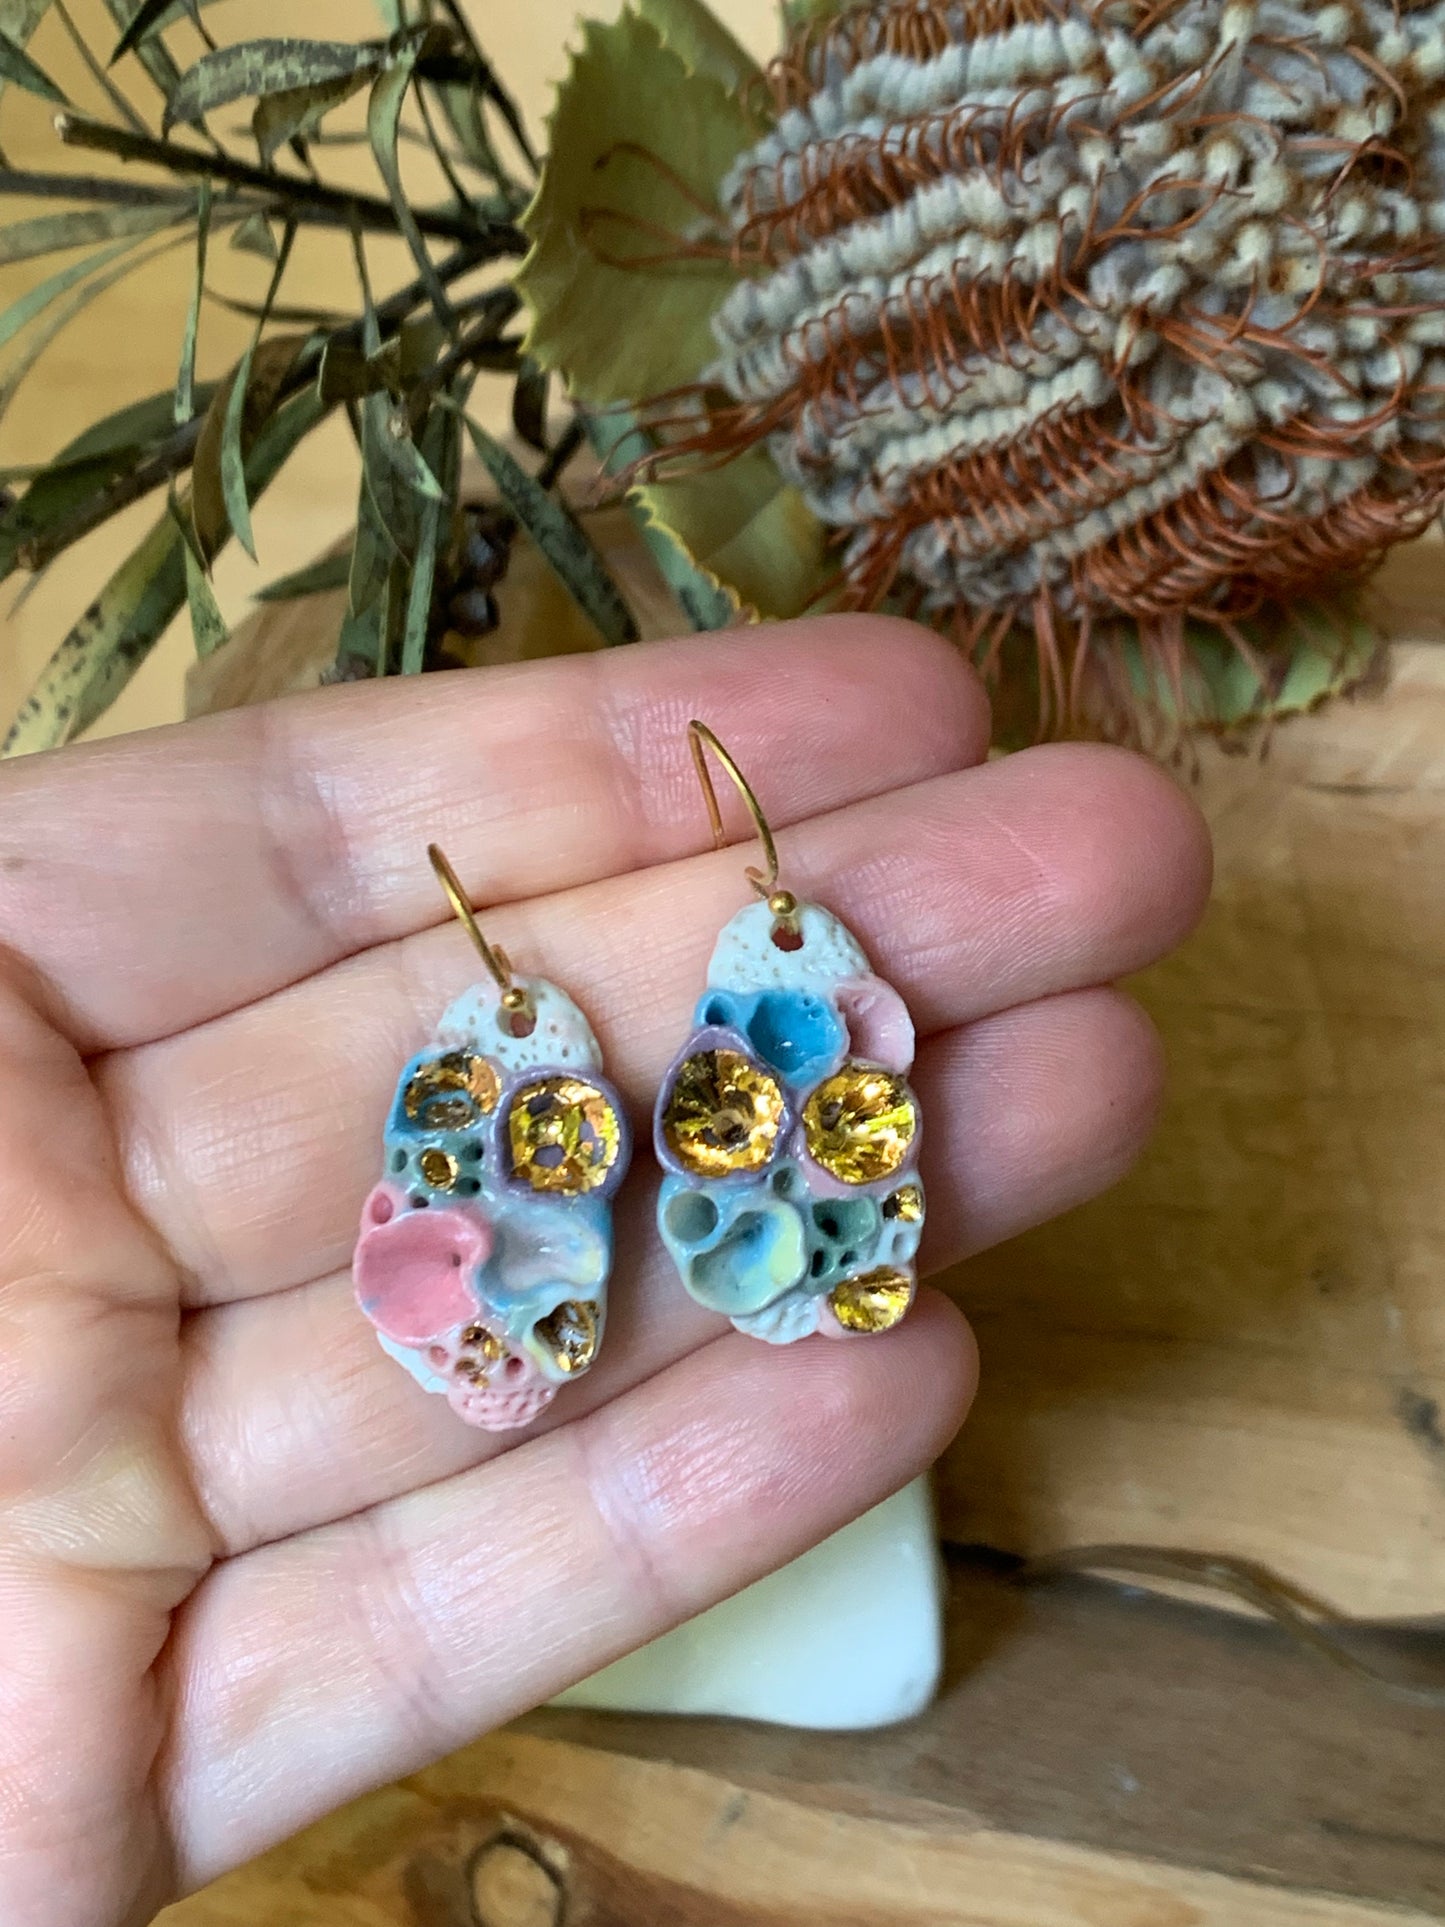 One pair of ‘rock coral’ porcelain earrings